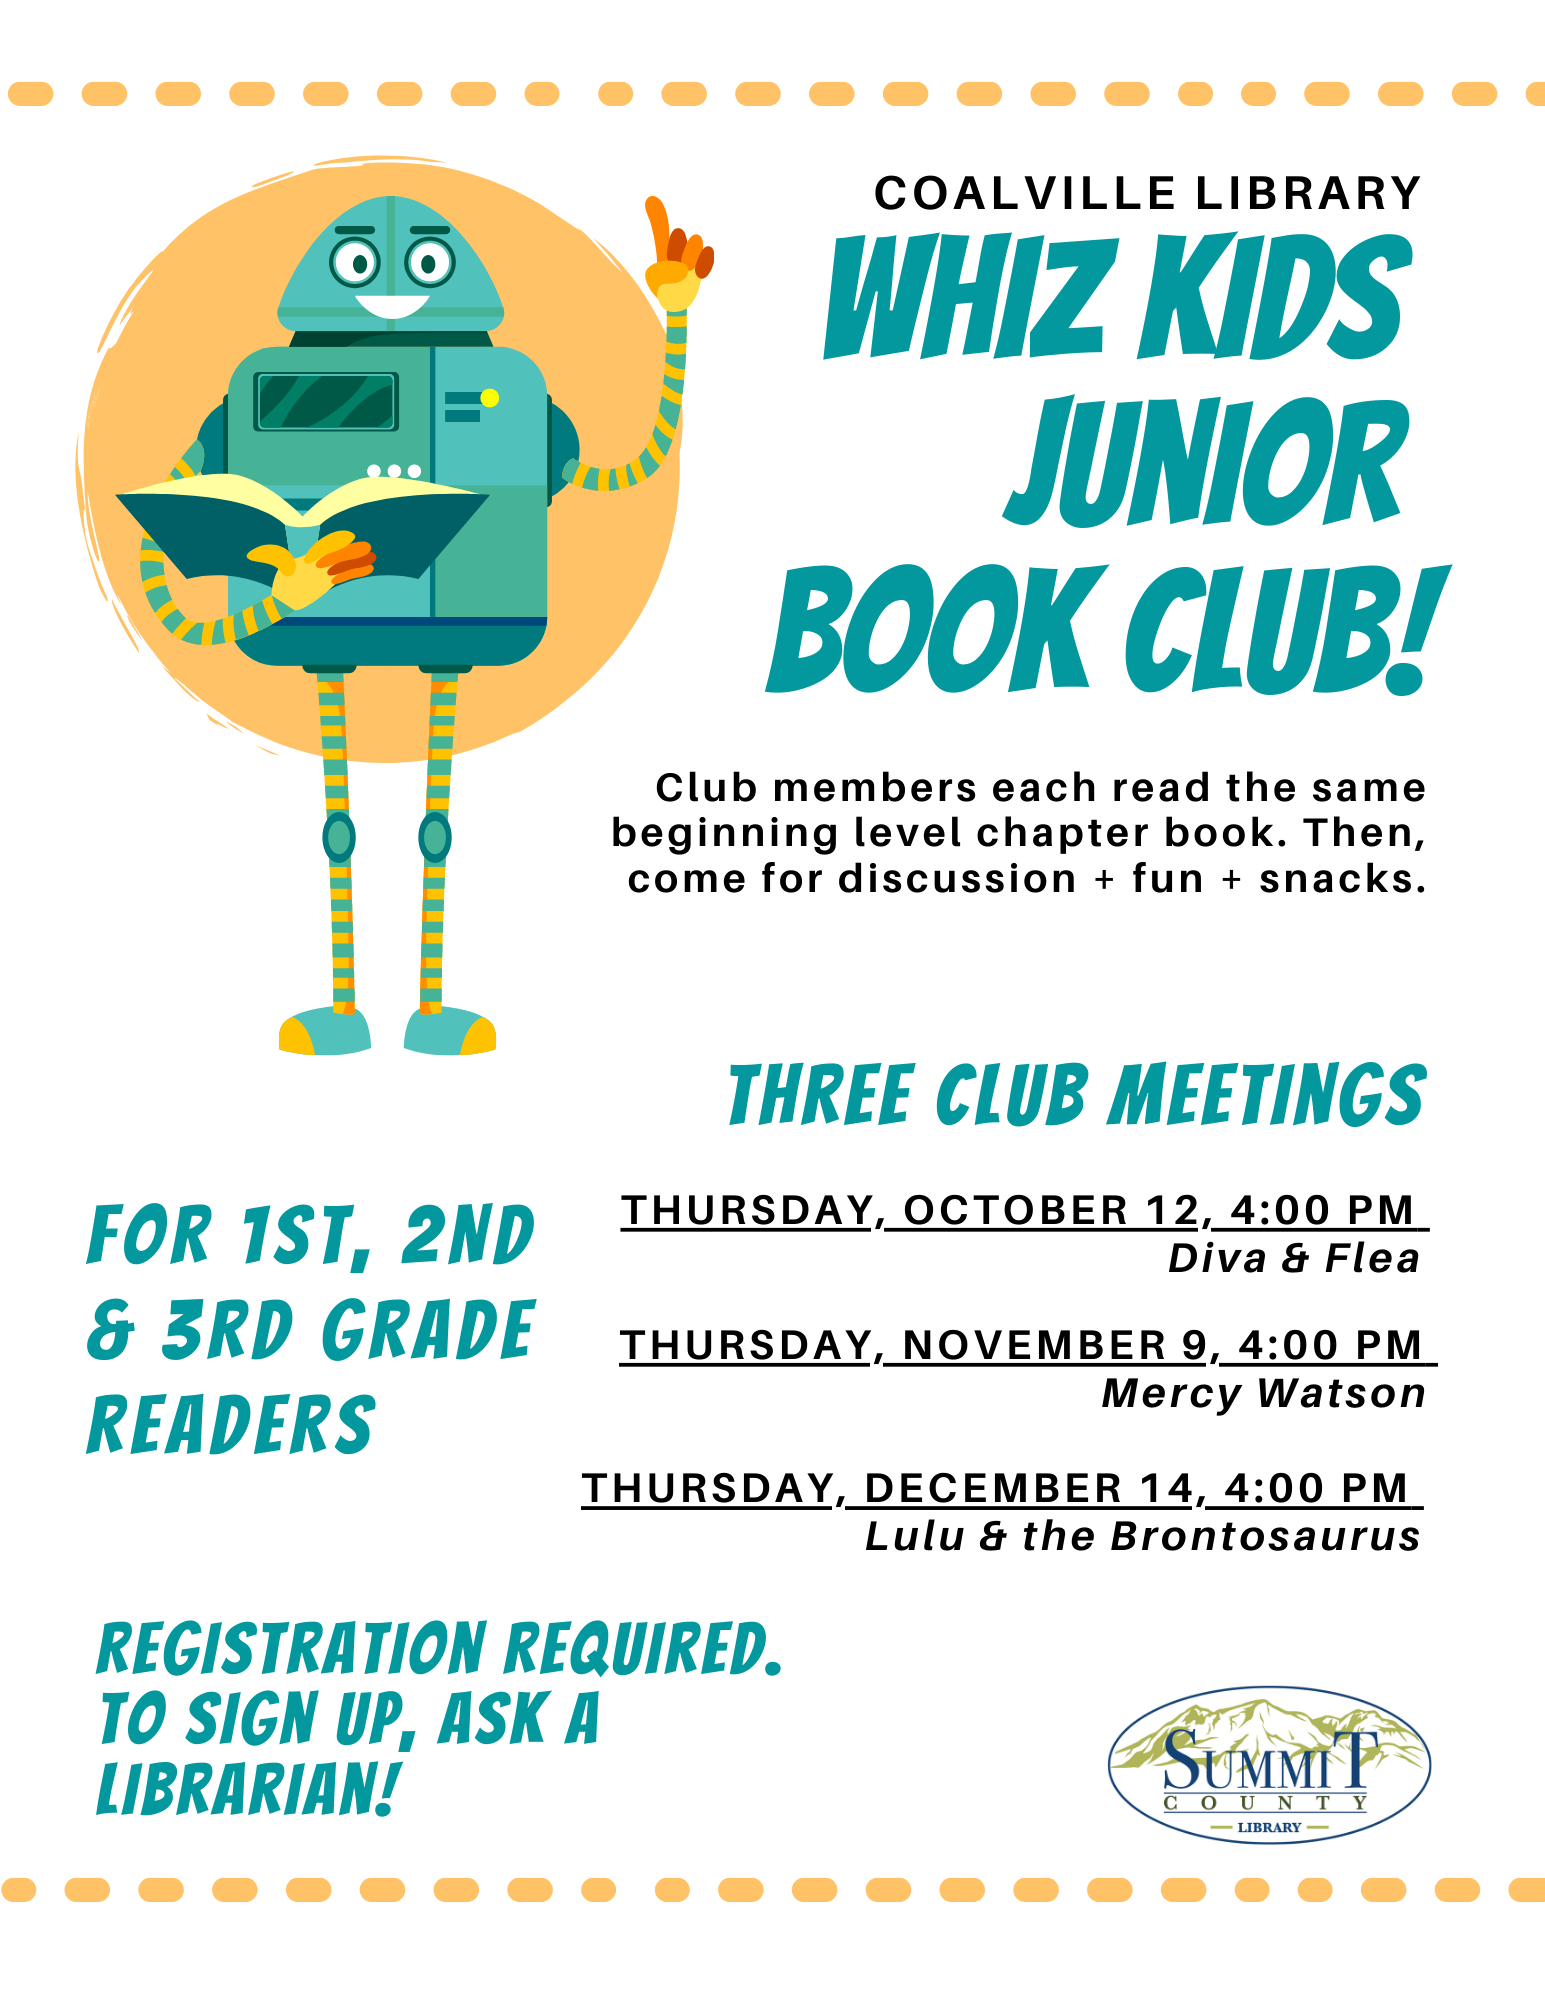 Whiz Kids Junior Book Club at Coalville